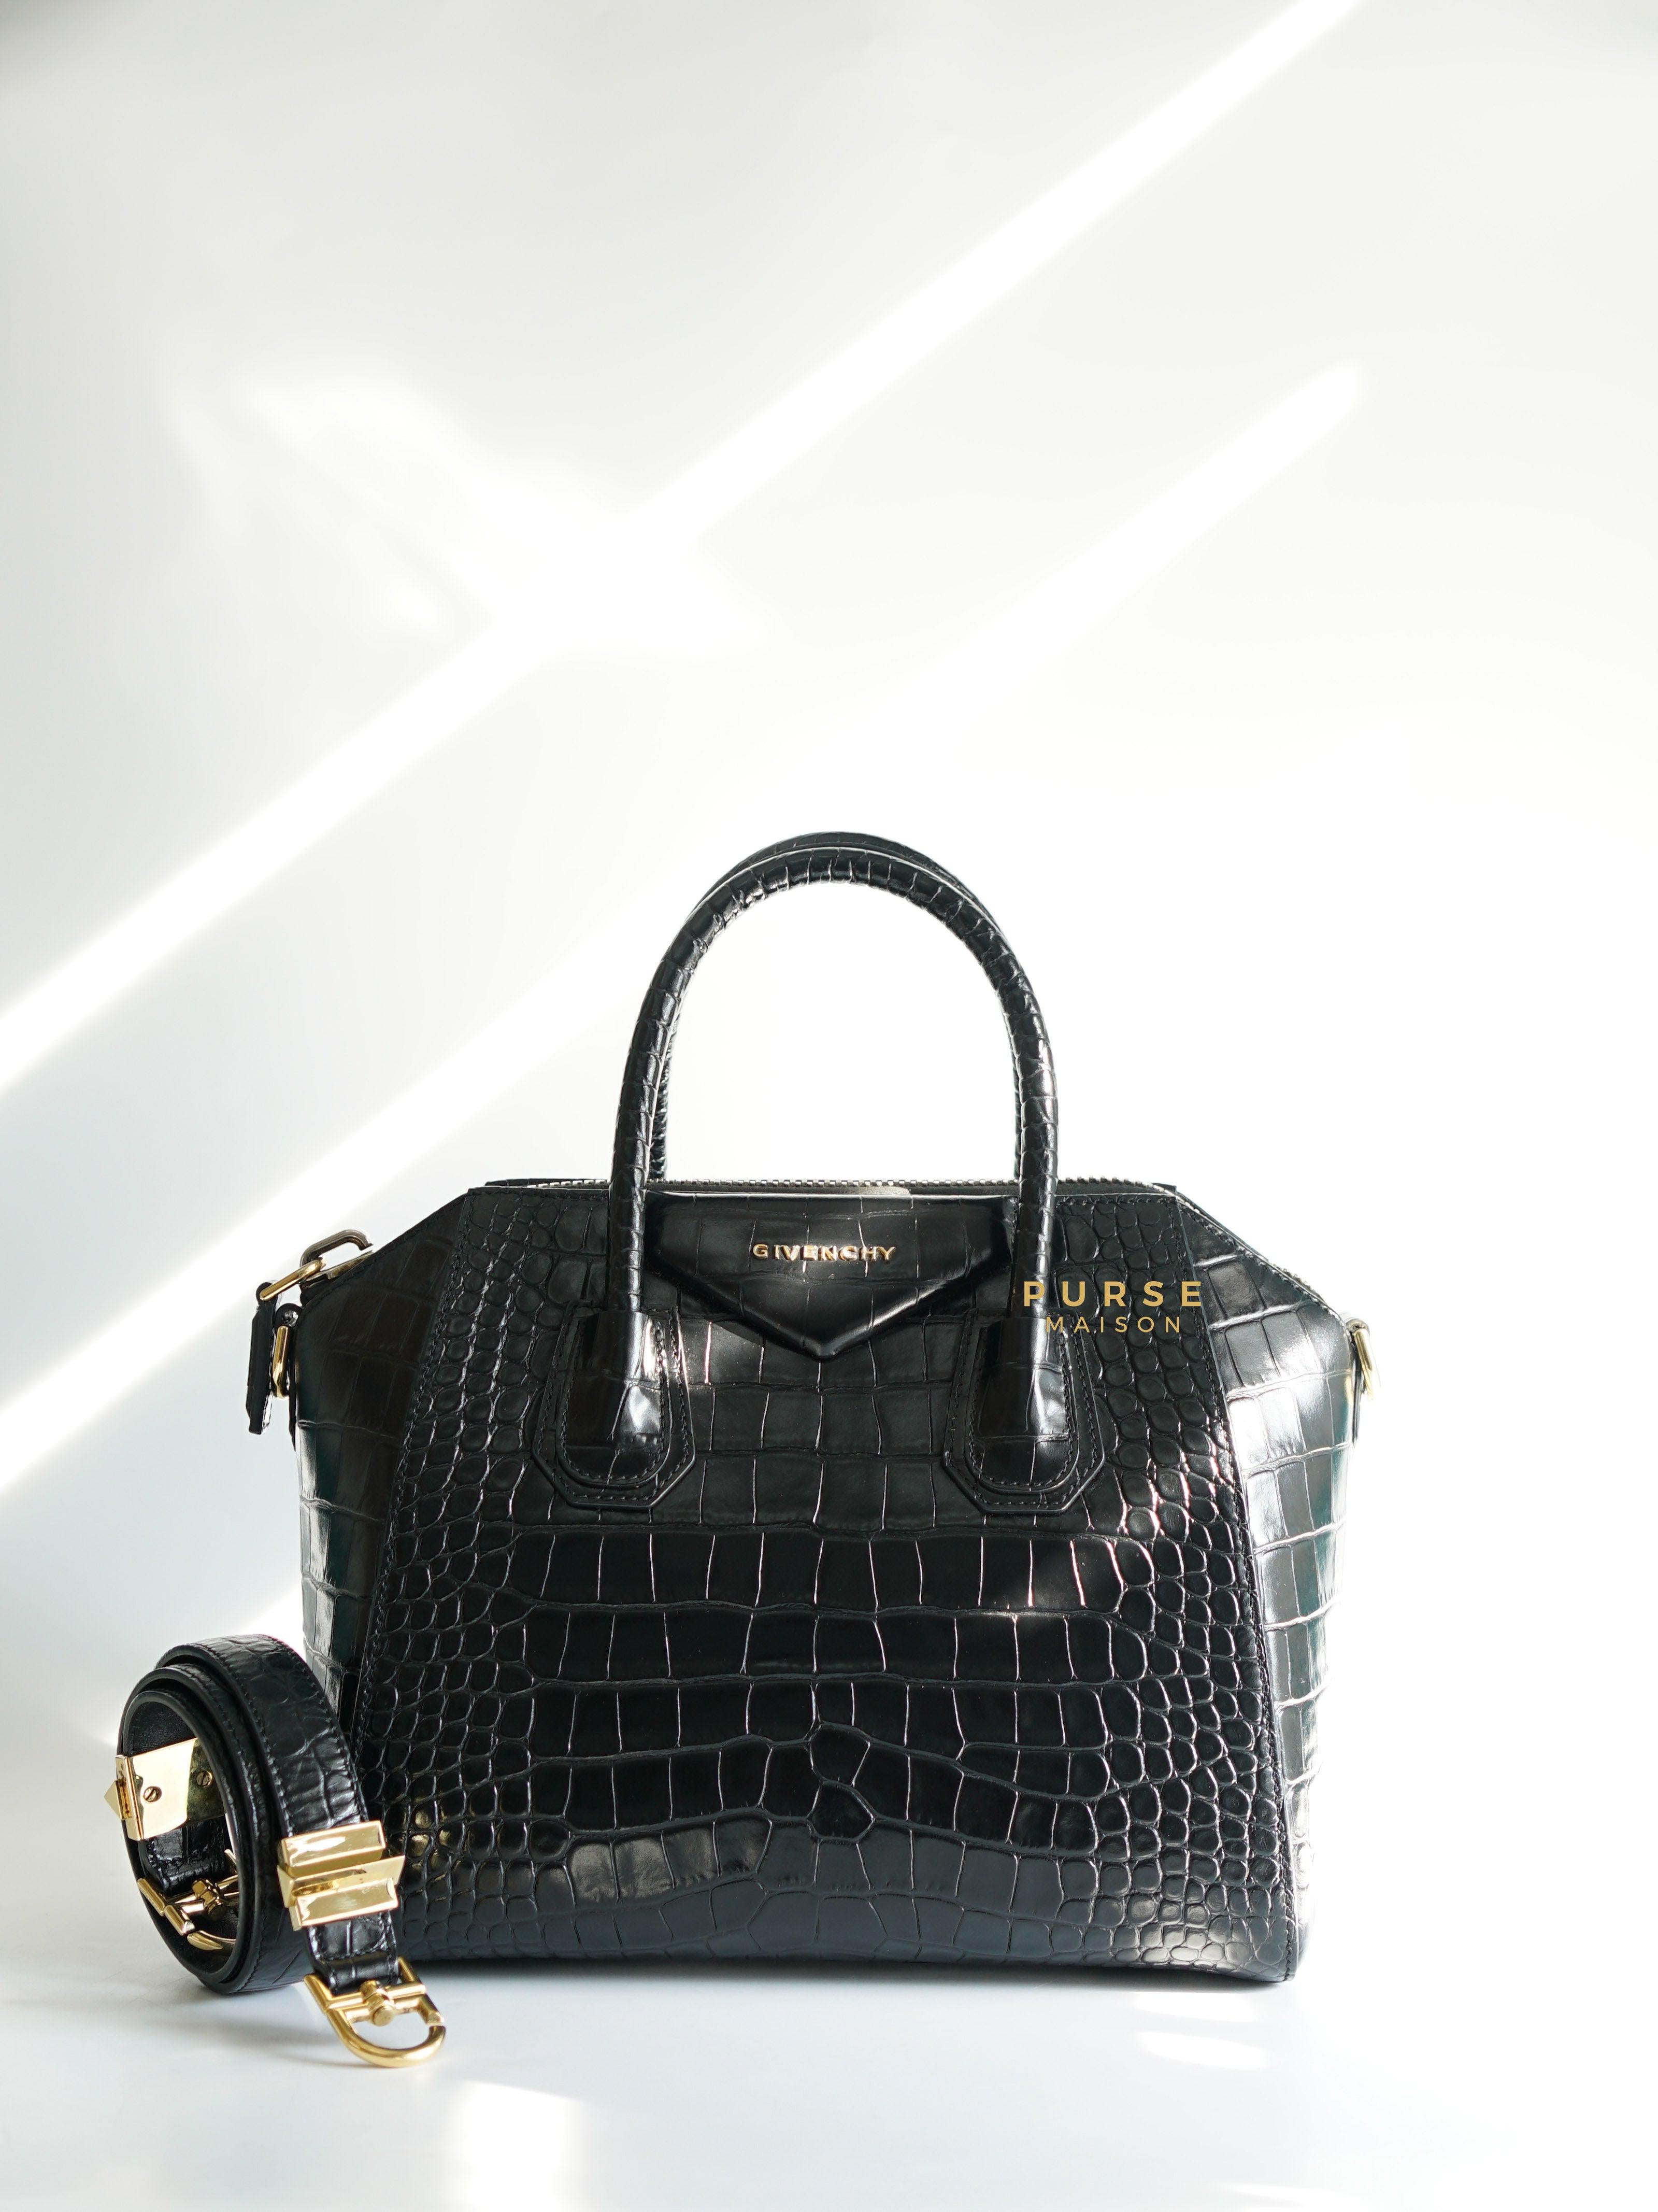 Amarige de Givenchy Gold Lame Purse Small Shoulder Bag, 80s Fashion | eBay